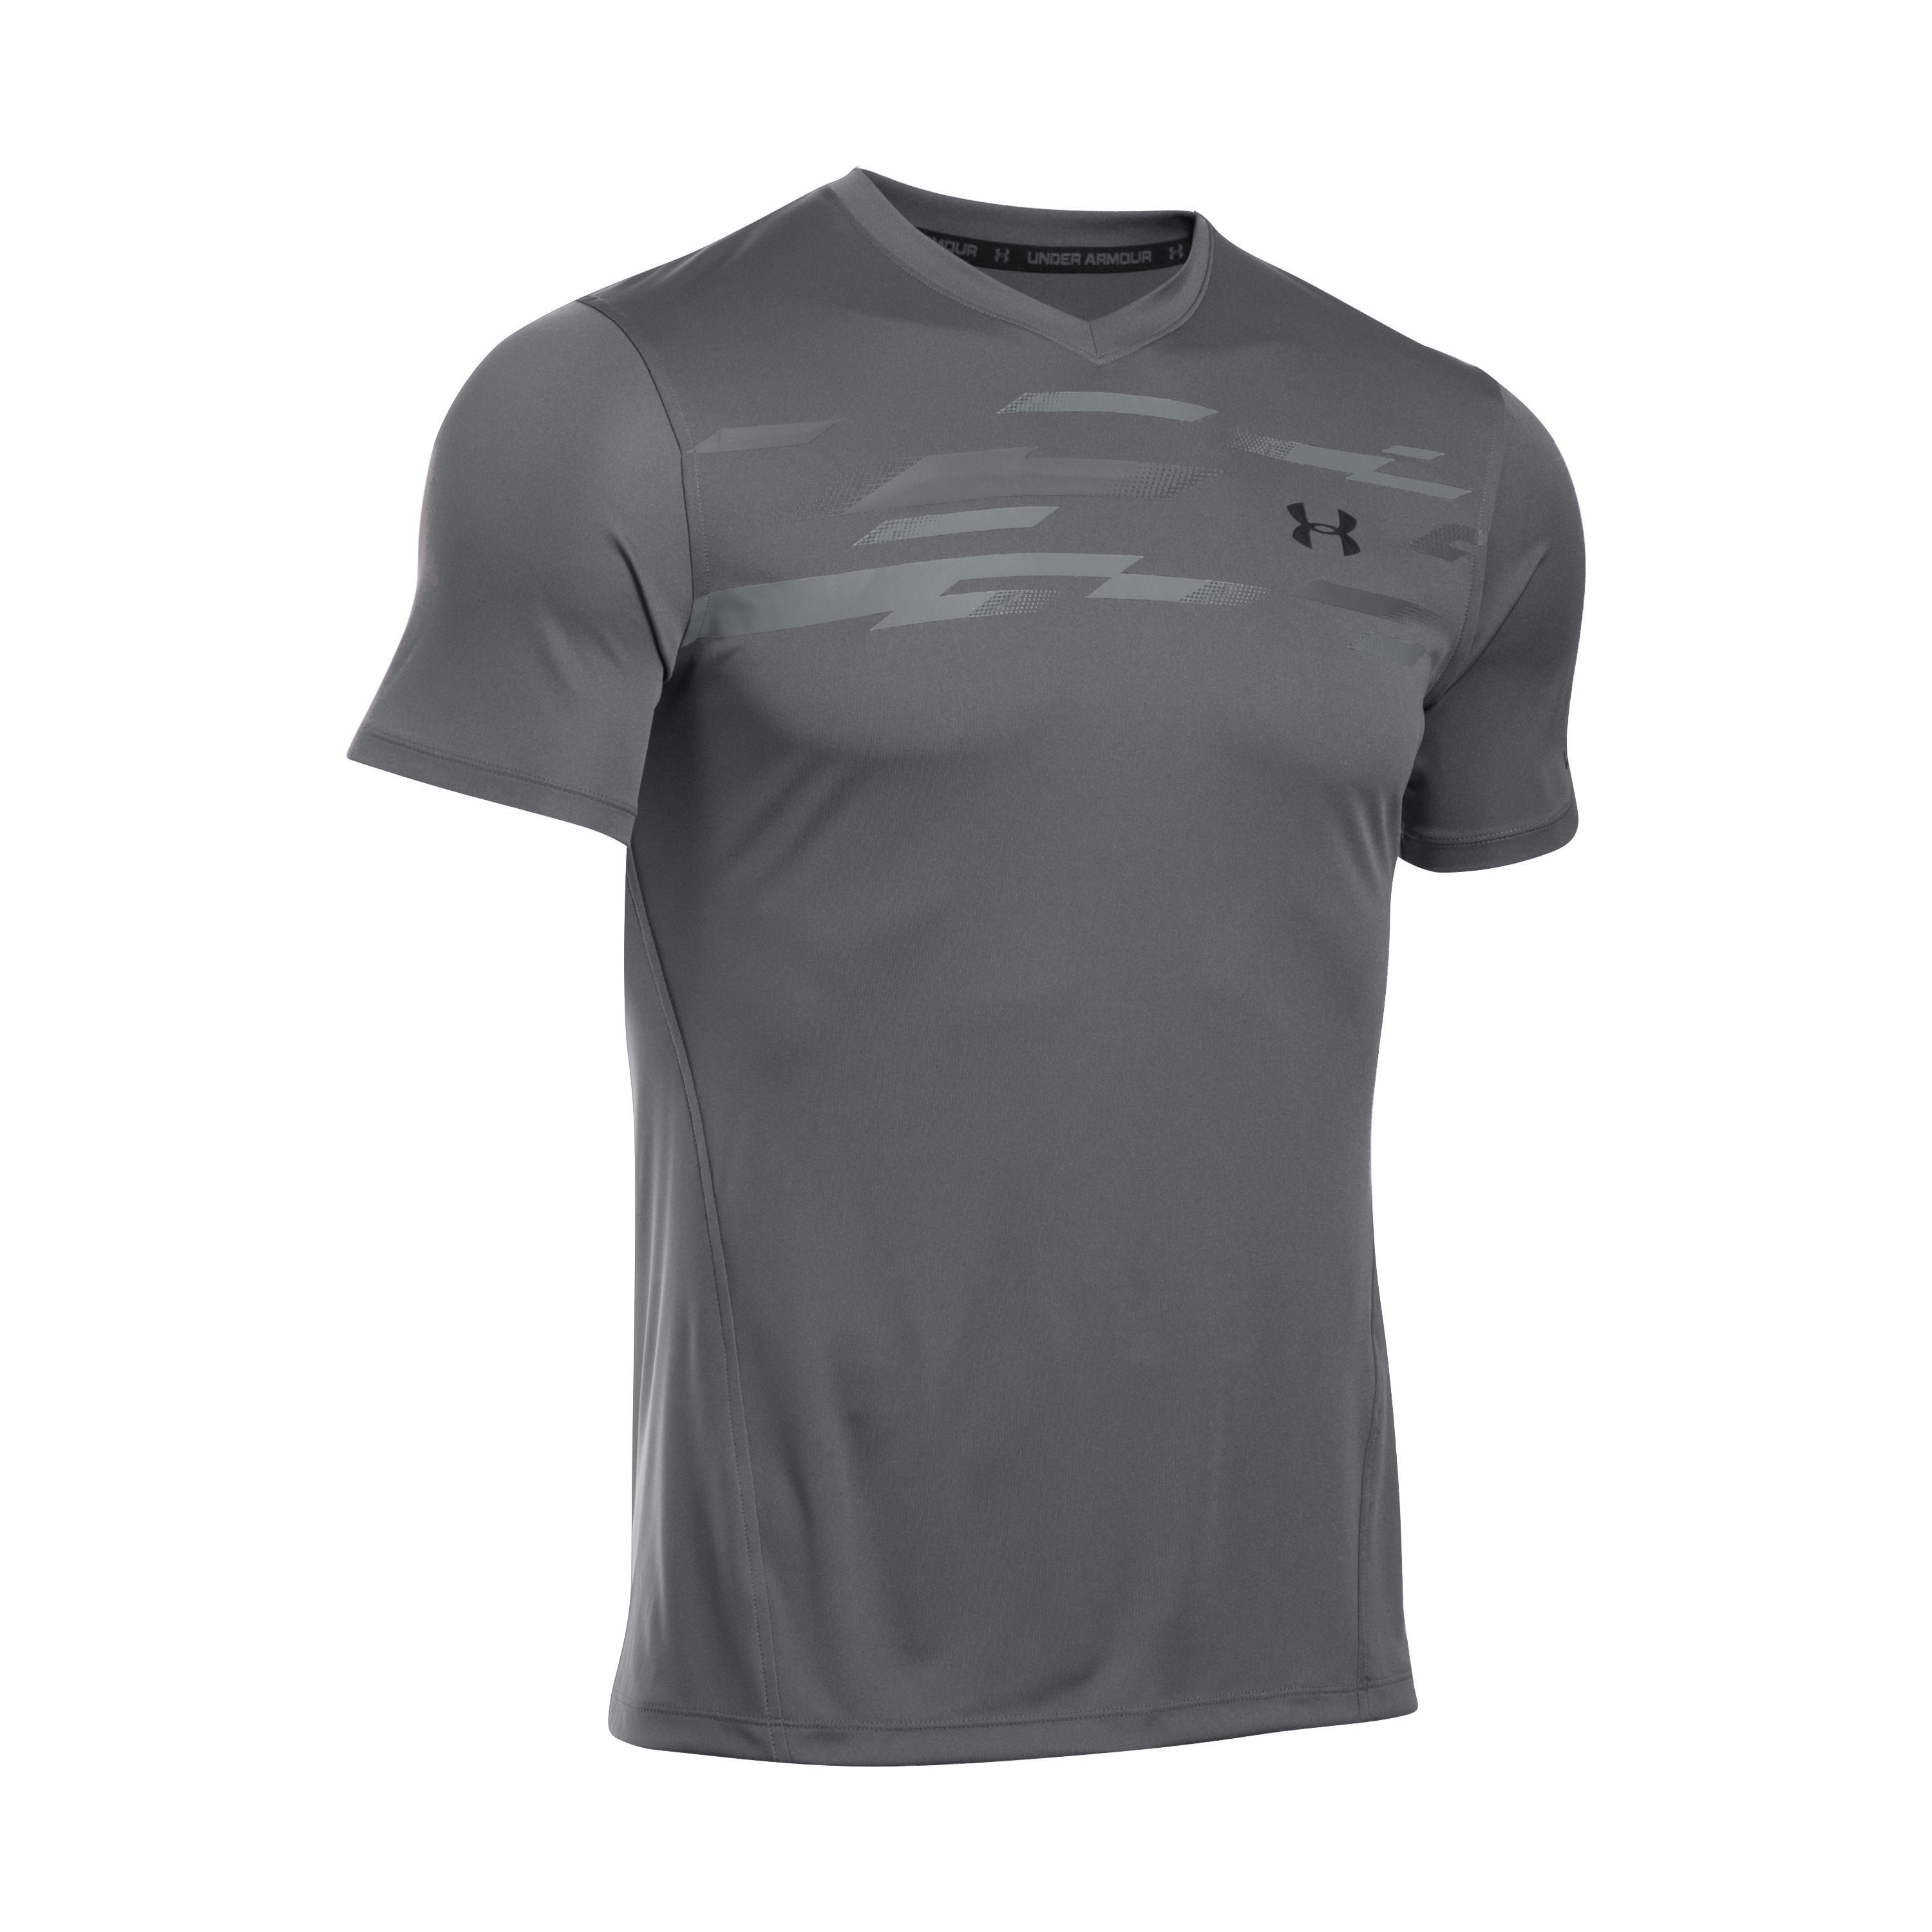 Under Armour HeatGear Fitted Raid Graphic T-Shirt Herren Tee Shirt 1298816-040 